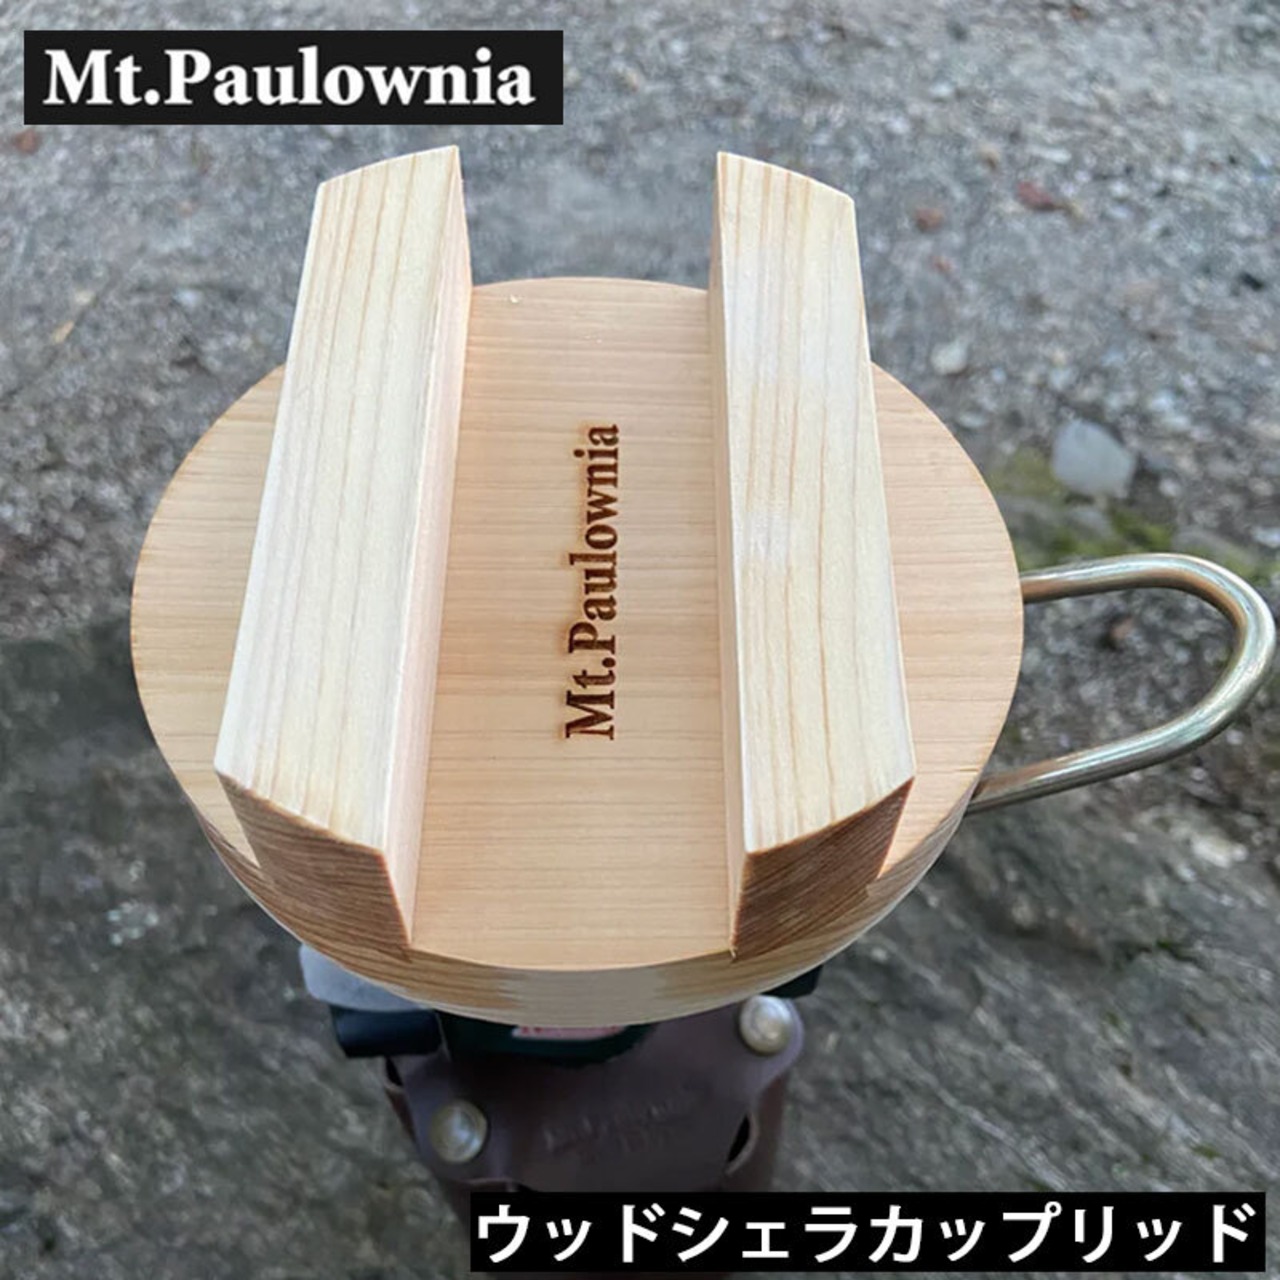 Mt.Paulownia(マウントポローニア) WOOD SIERRA CUP LID ウッドシェラカップリッド 飯盒蓋